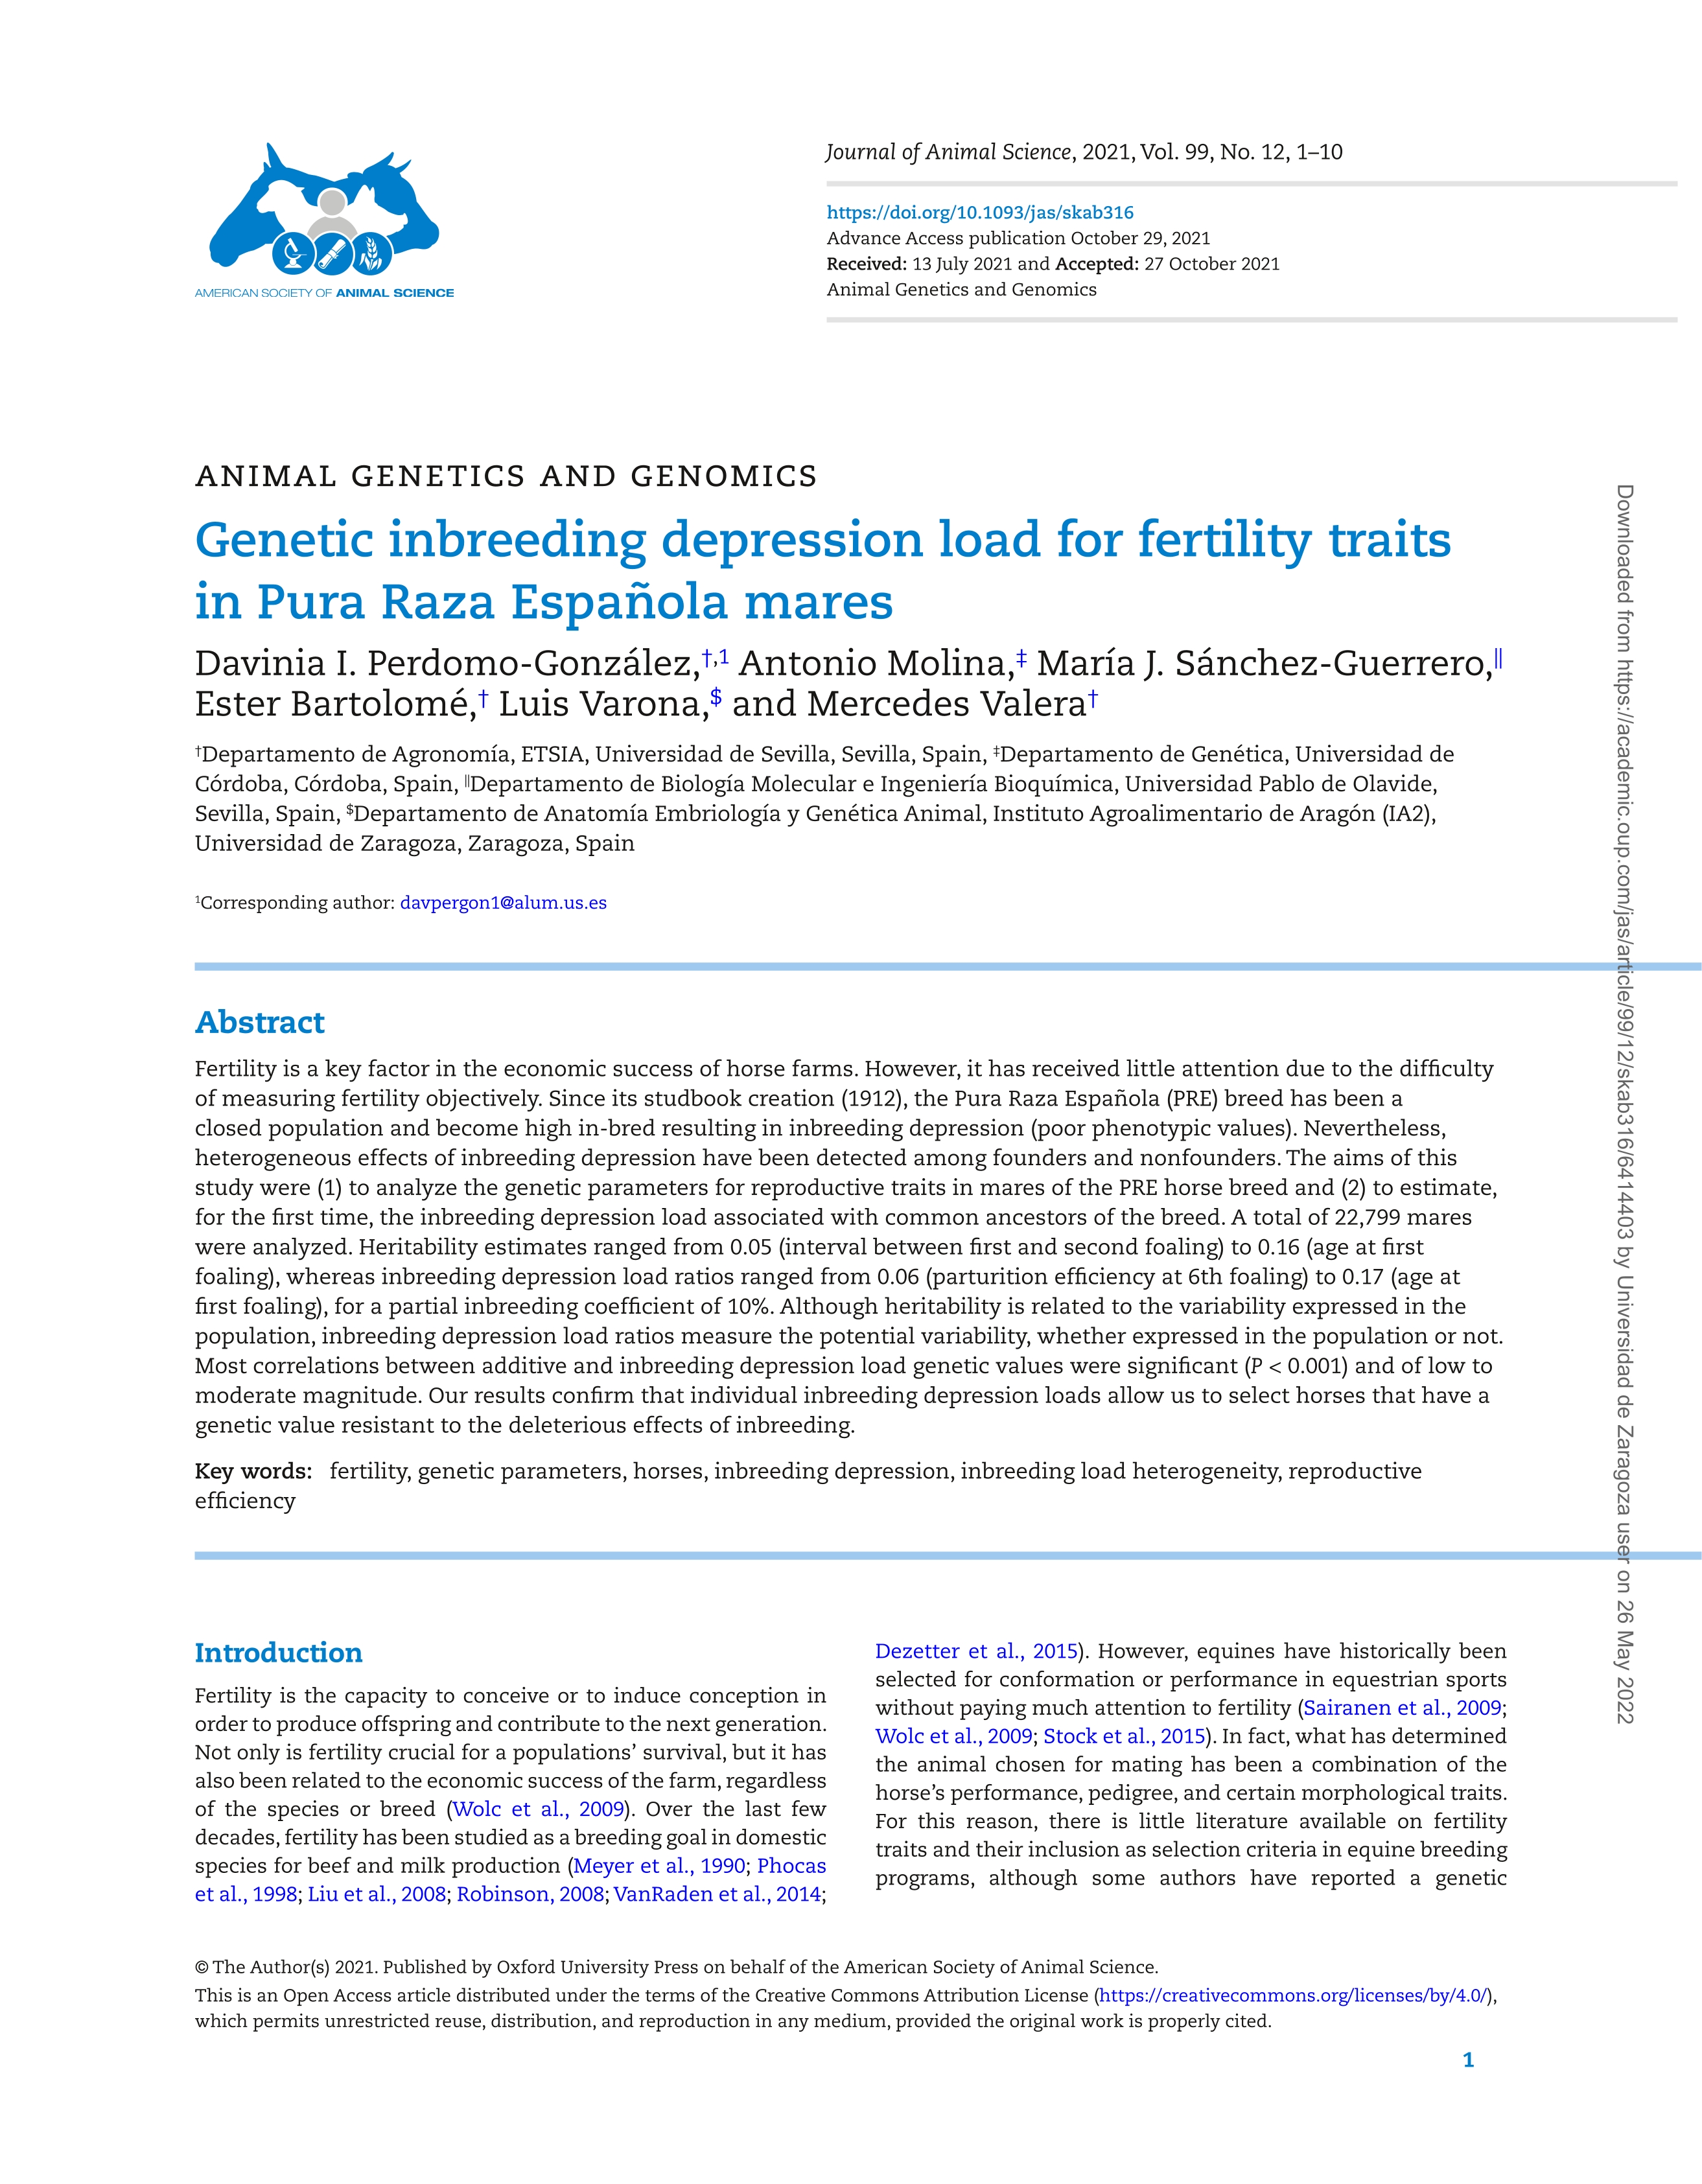 Genetic inbreeding depression load for fertility traits in Pura Raza Española mares